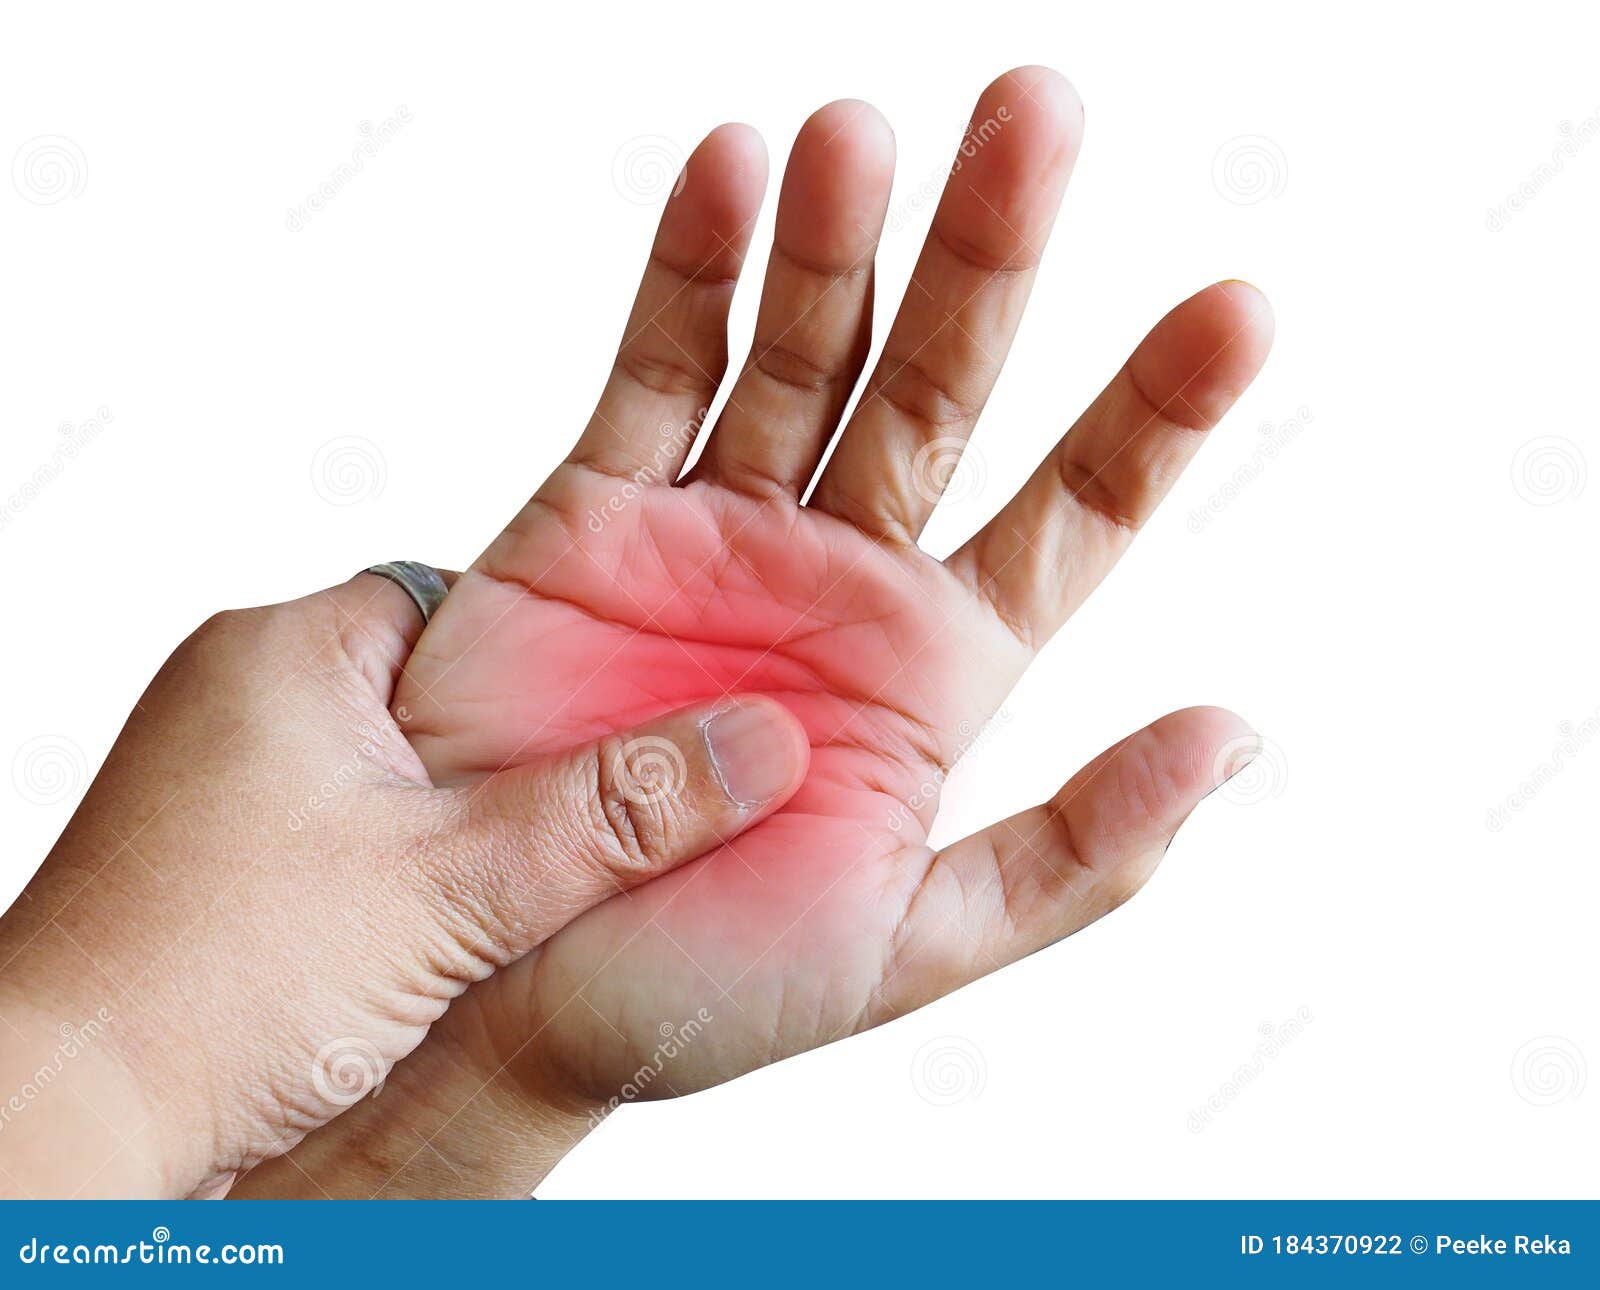 Сильная боль в пальцах рук